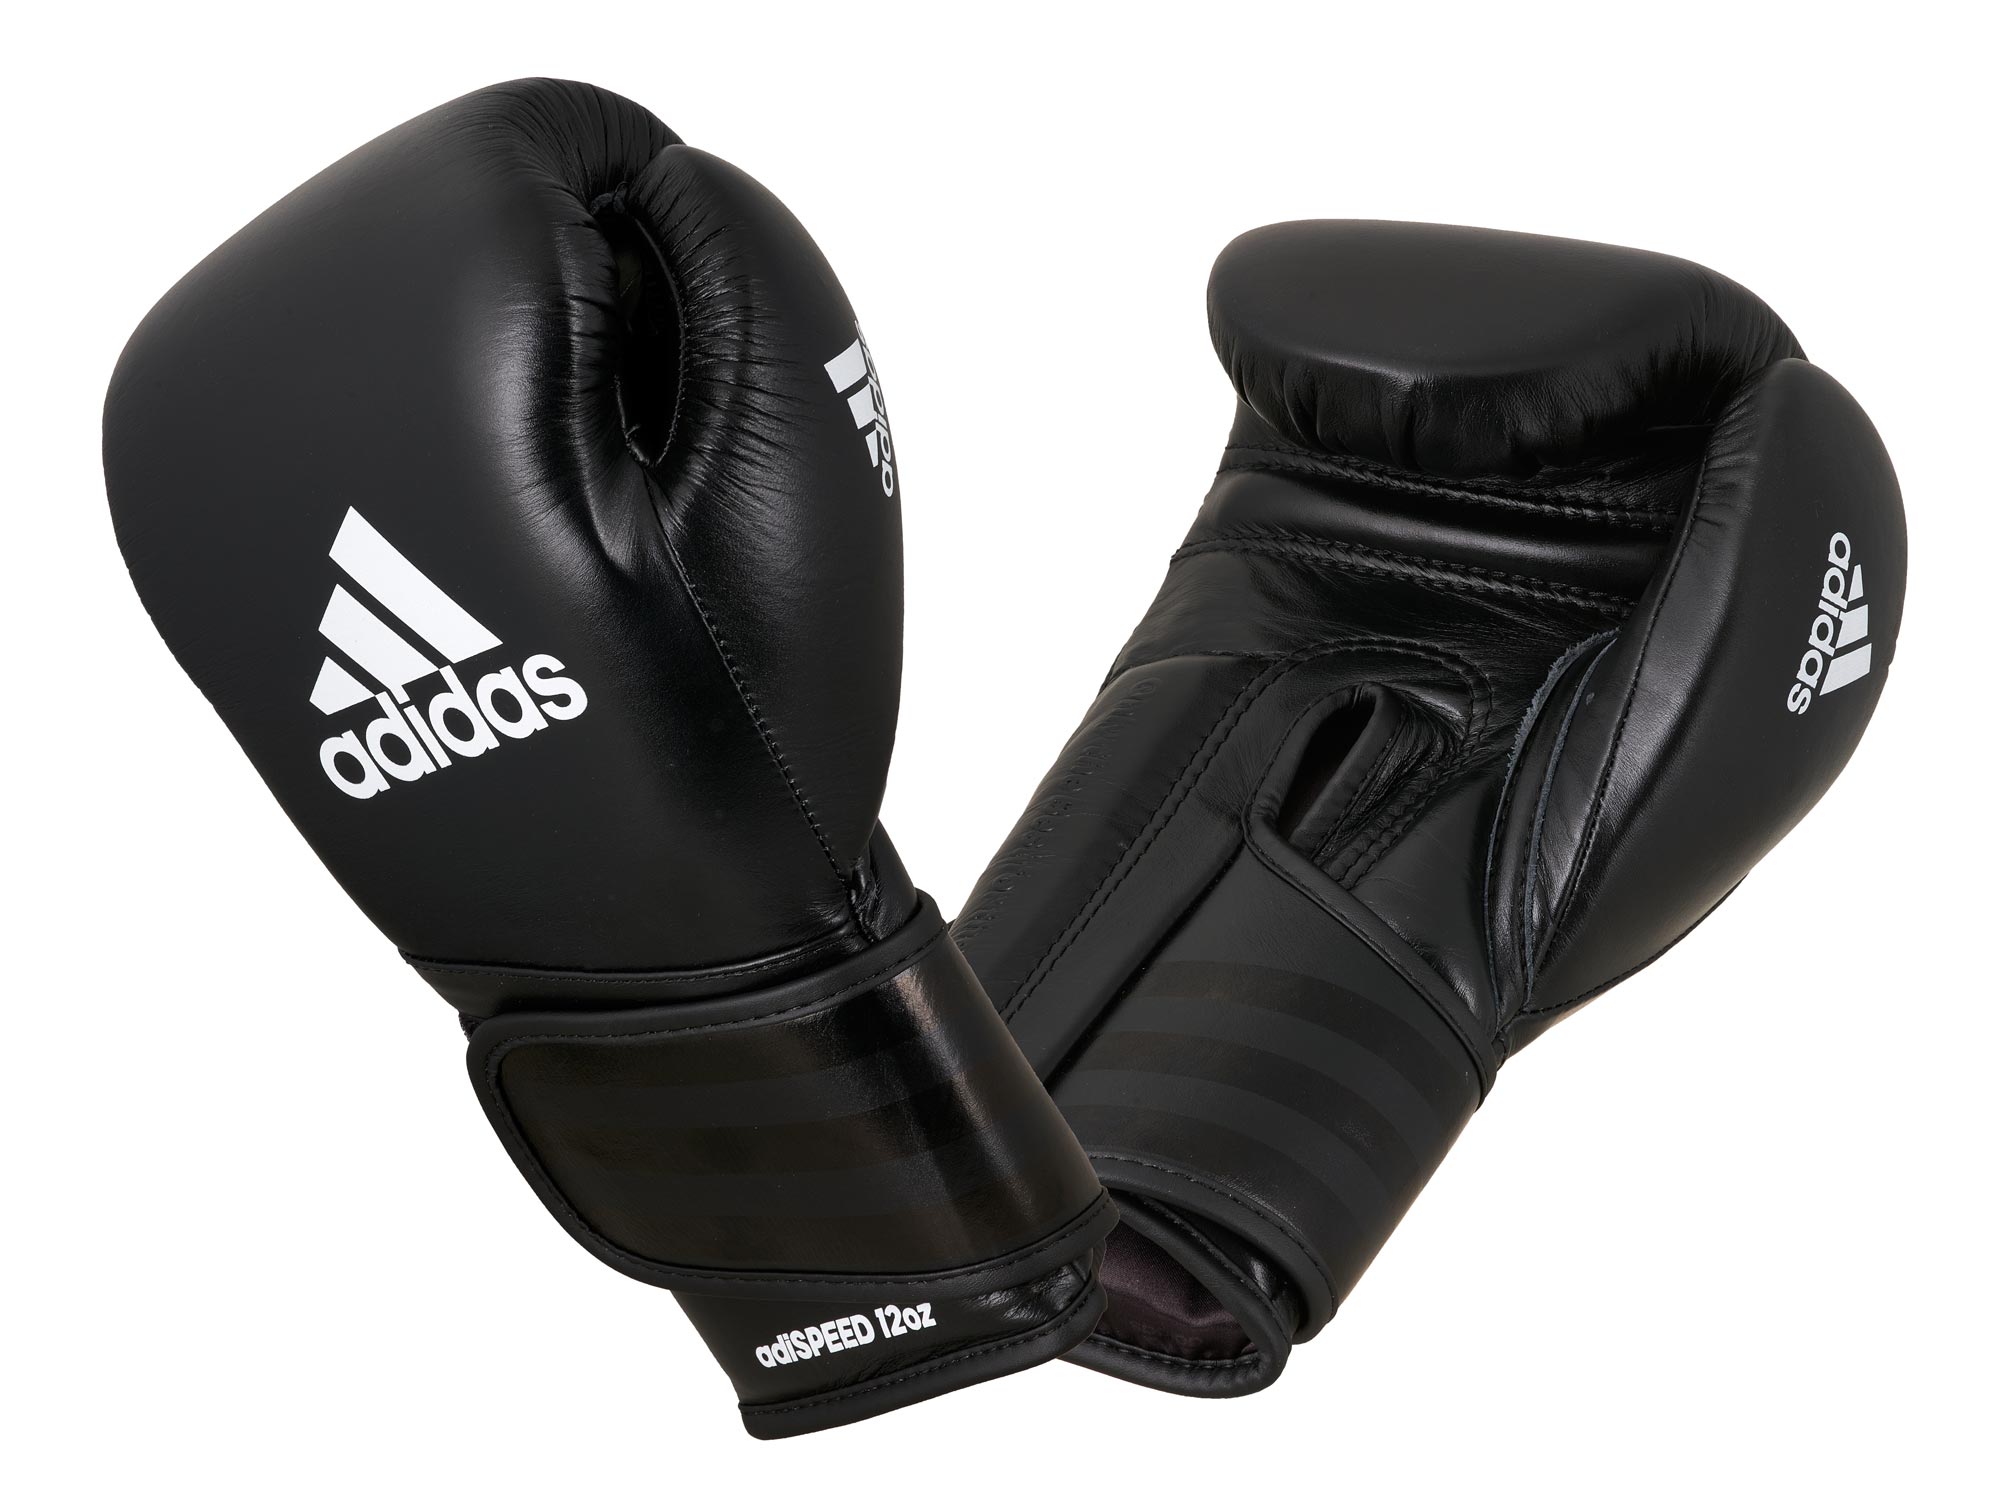 adidas boxing glove adispeed strap up ADISBG501PRO, black/white